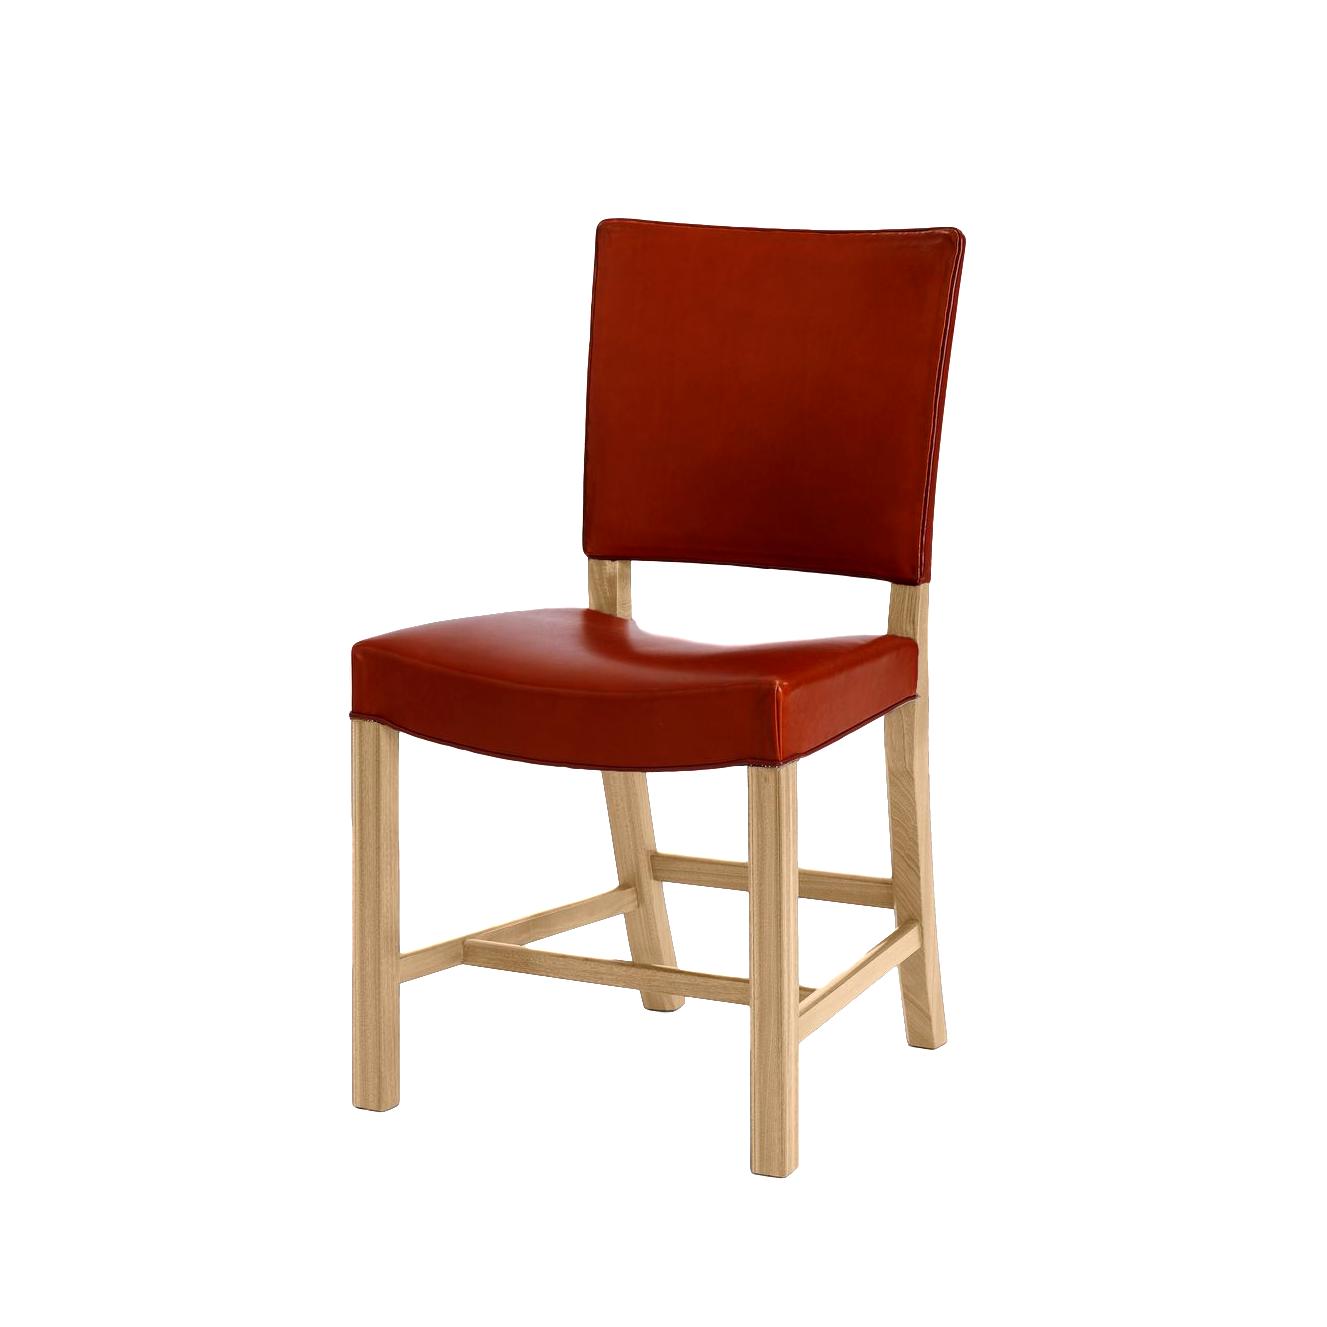 Carl Hansen KK39490 Kleine rode stoel, eikenzoete/zwart leer